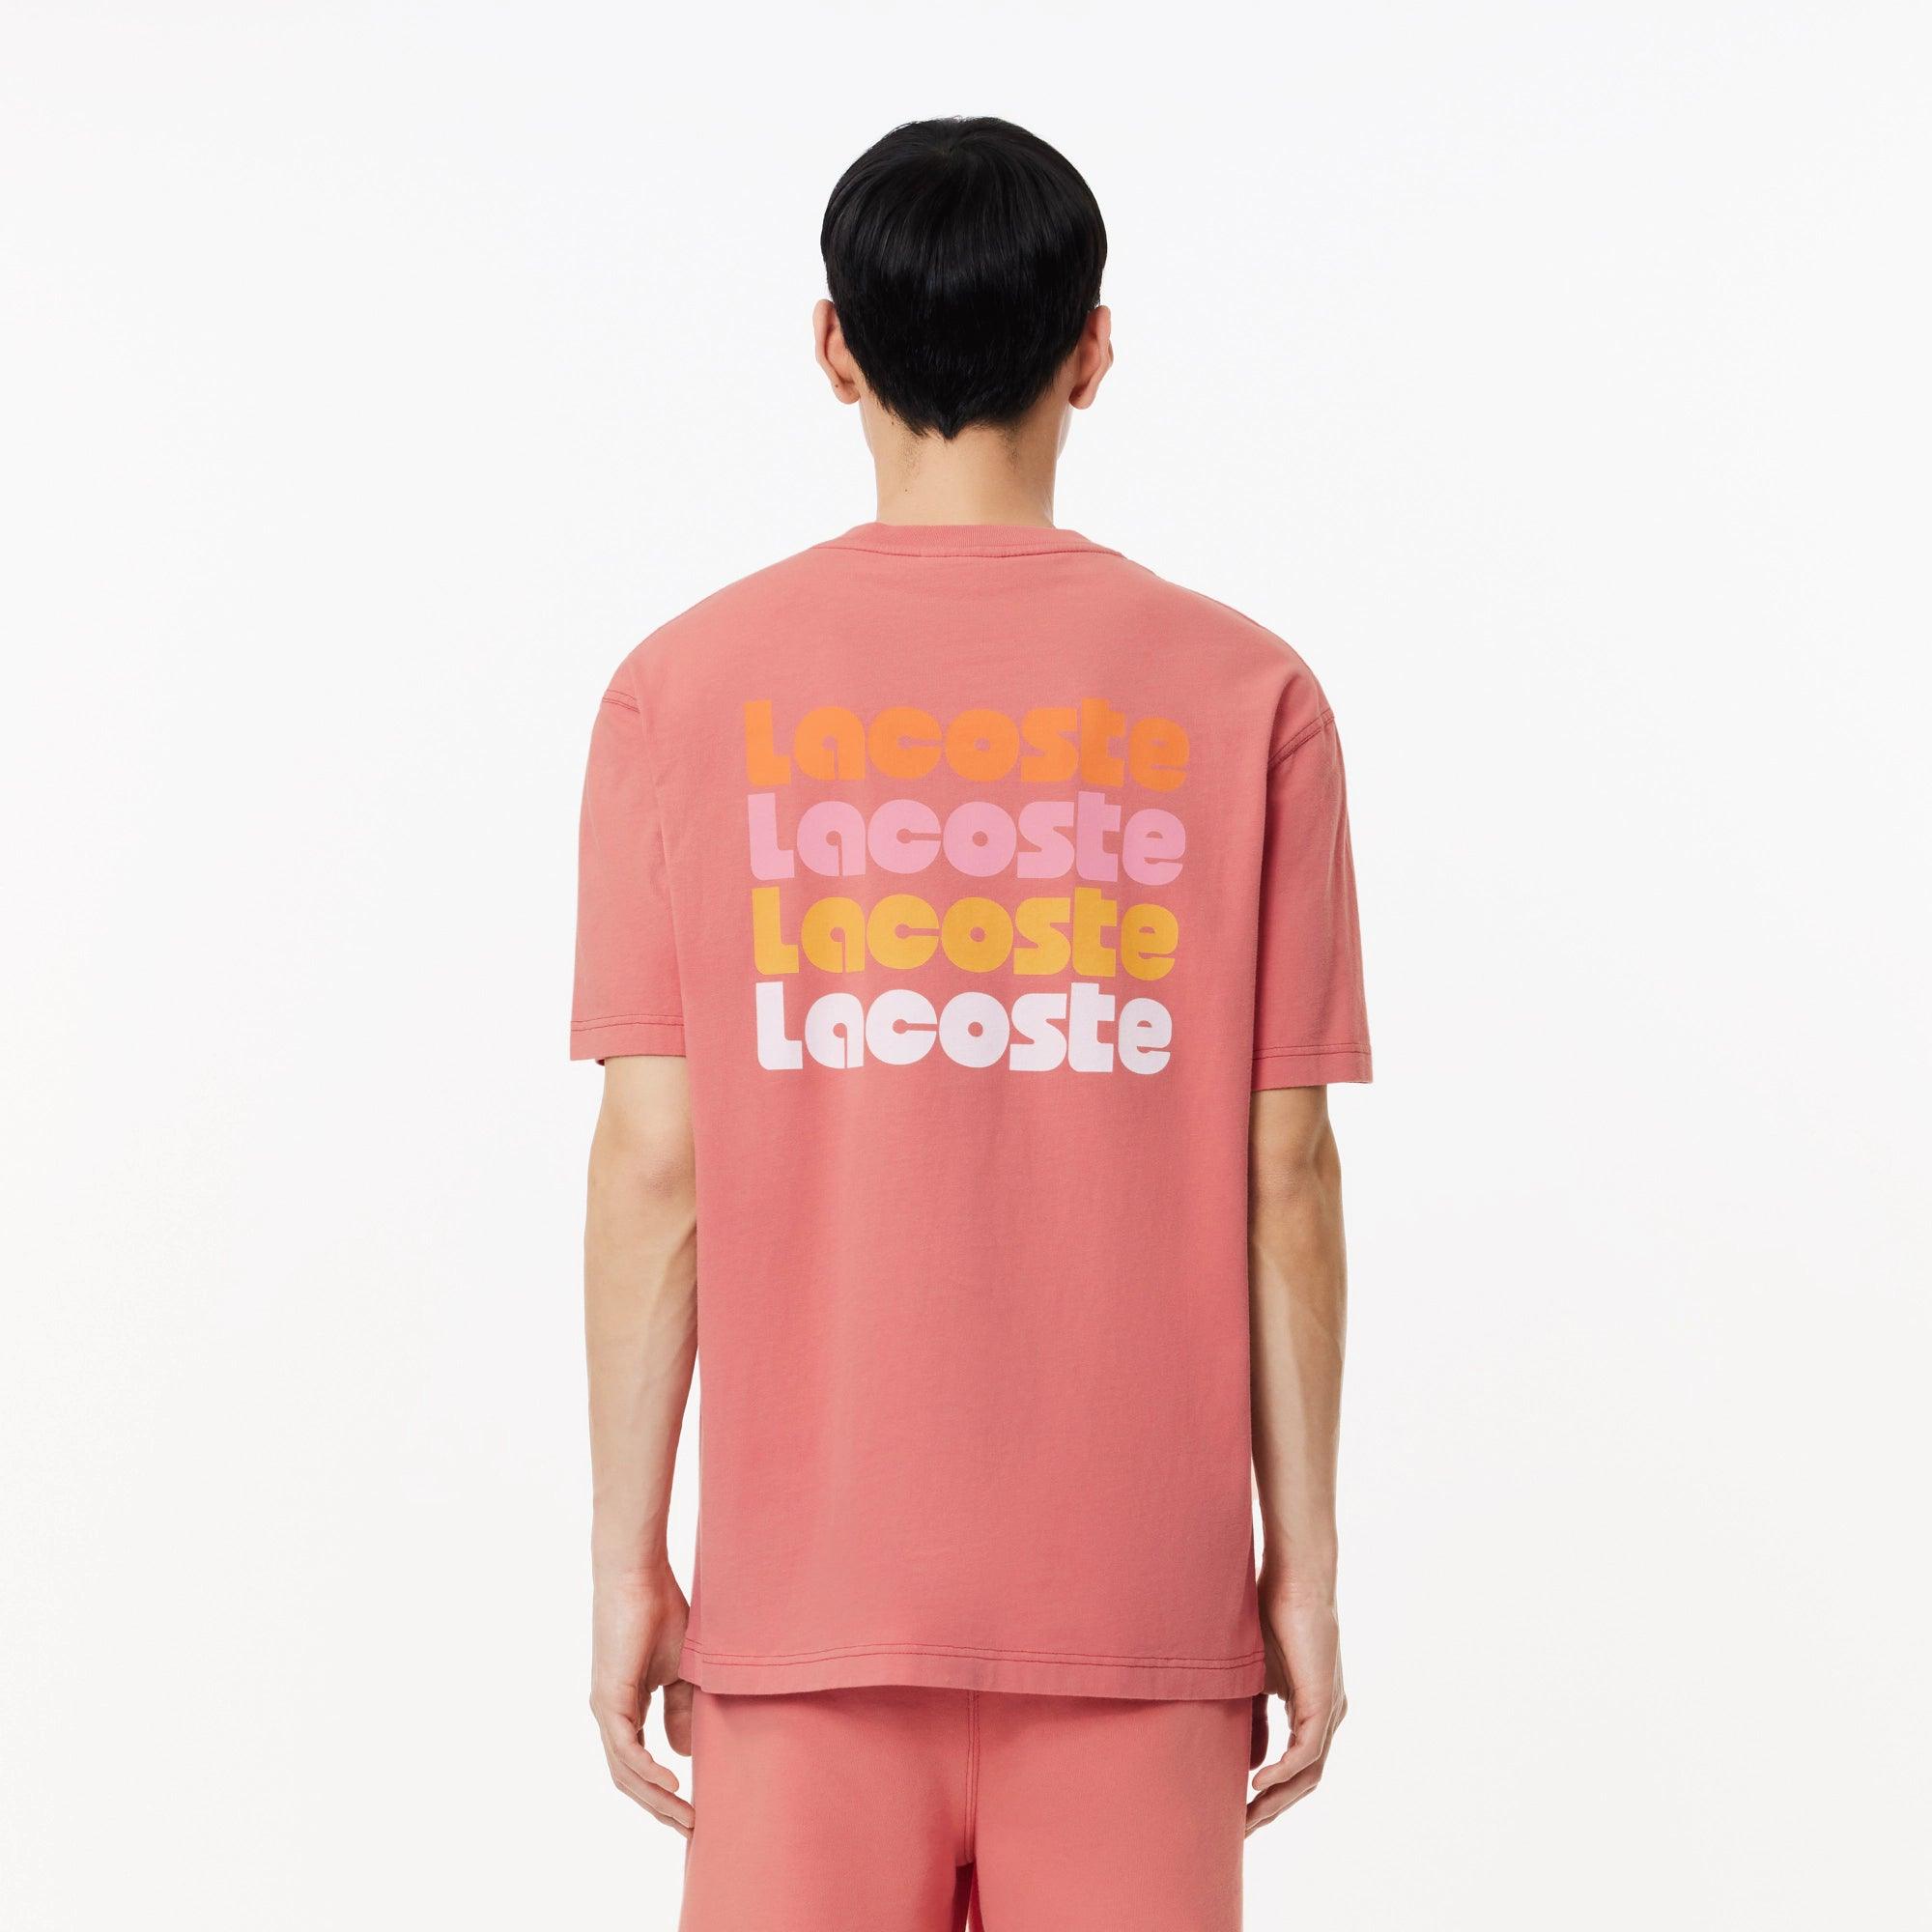 Camiseta LACOSTE Efecto Lavado Degradé Rosa - ECRU